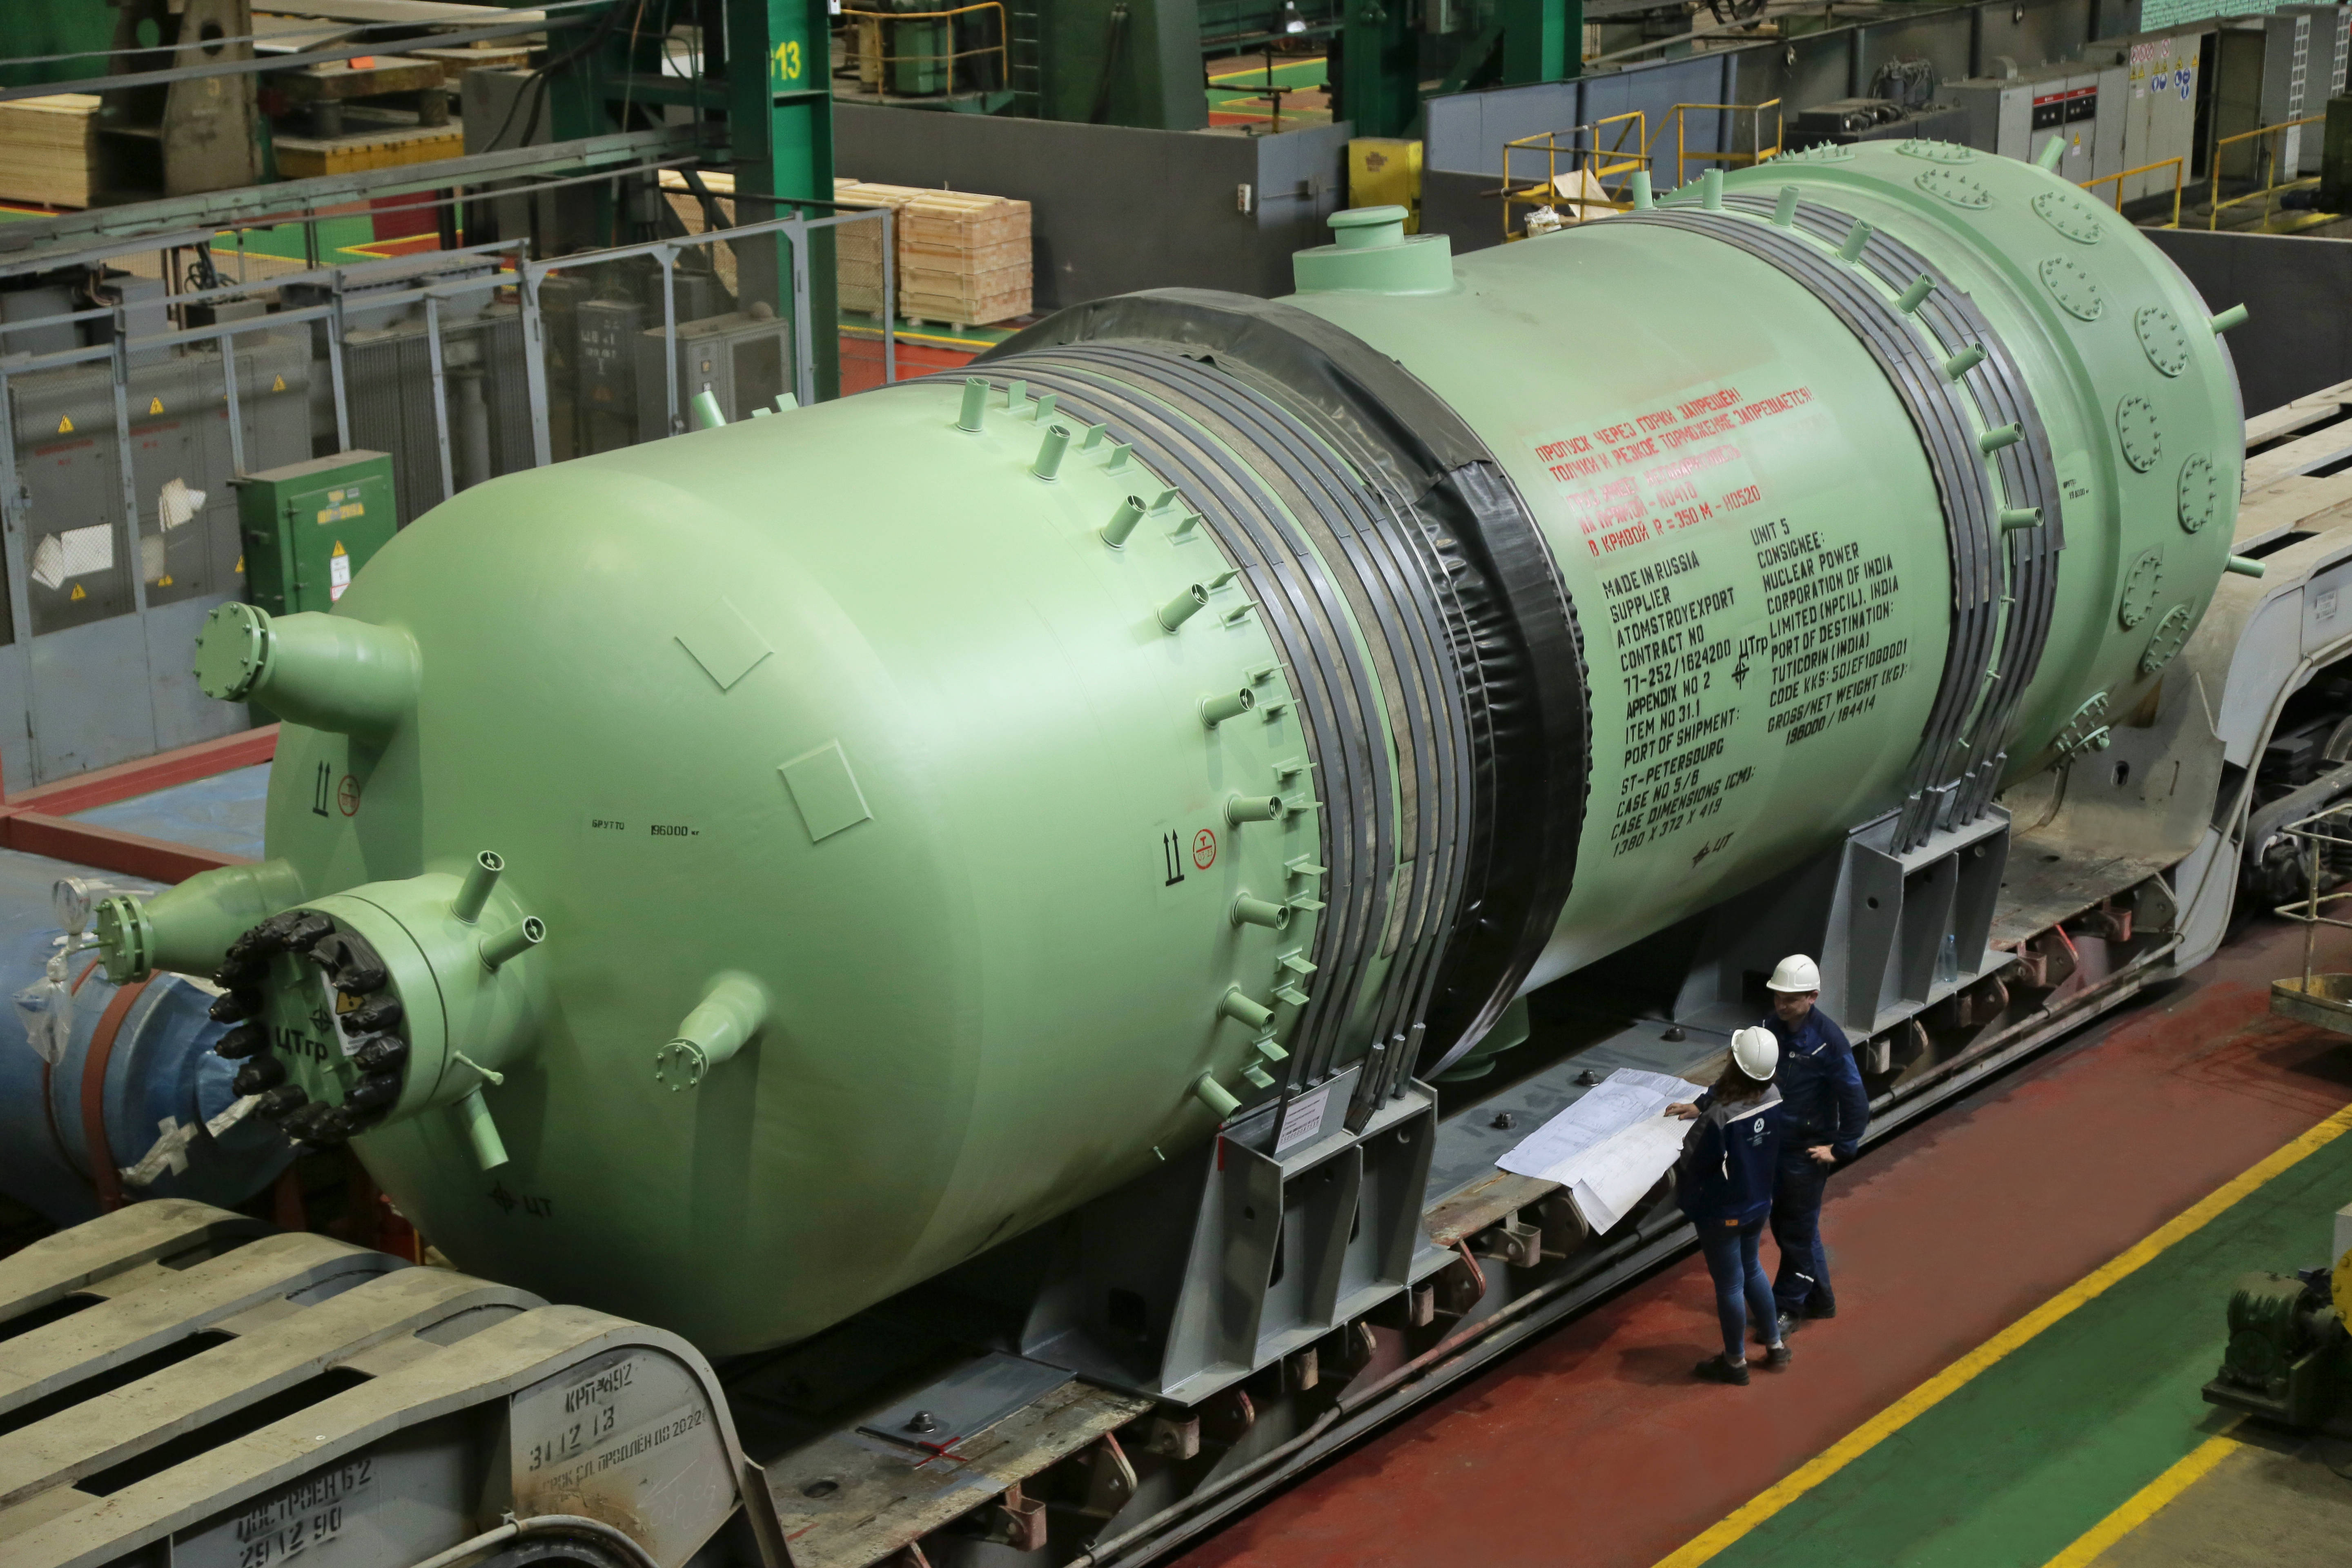 ROSATOM has shipped Pressurizer to India